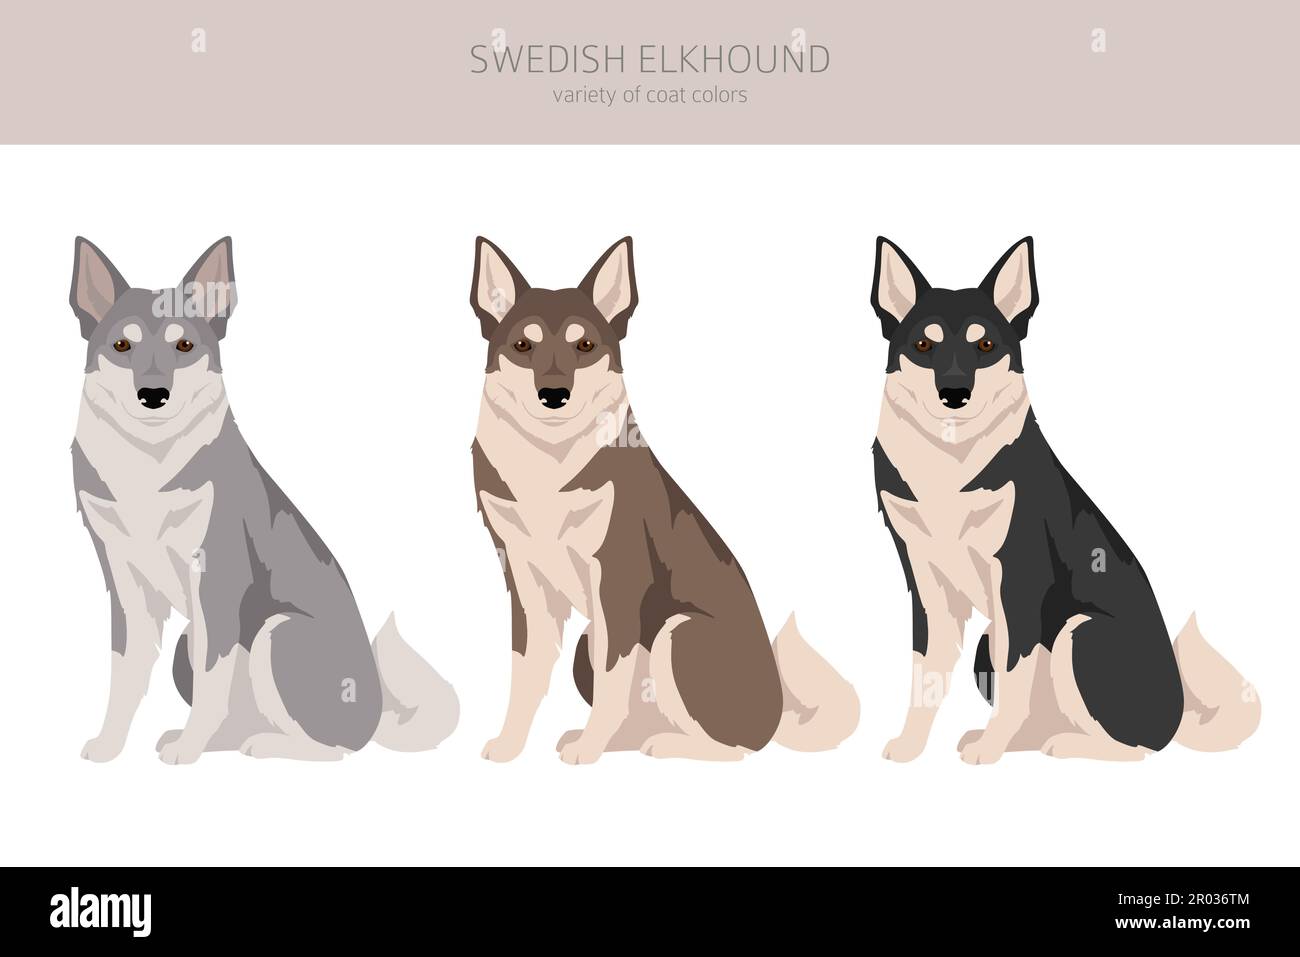 Swedish Elkhound clipart. All coat colors set.  All dog breeds characteristics infographic. Vector illustration Stock Vector